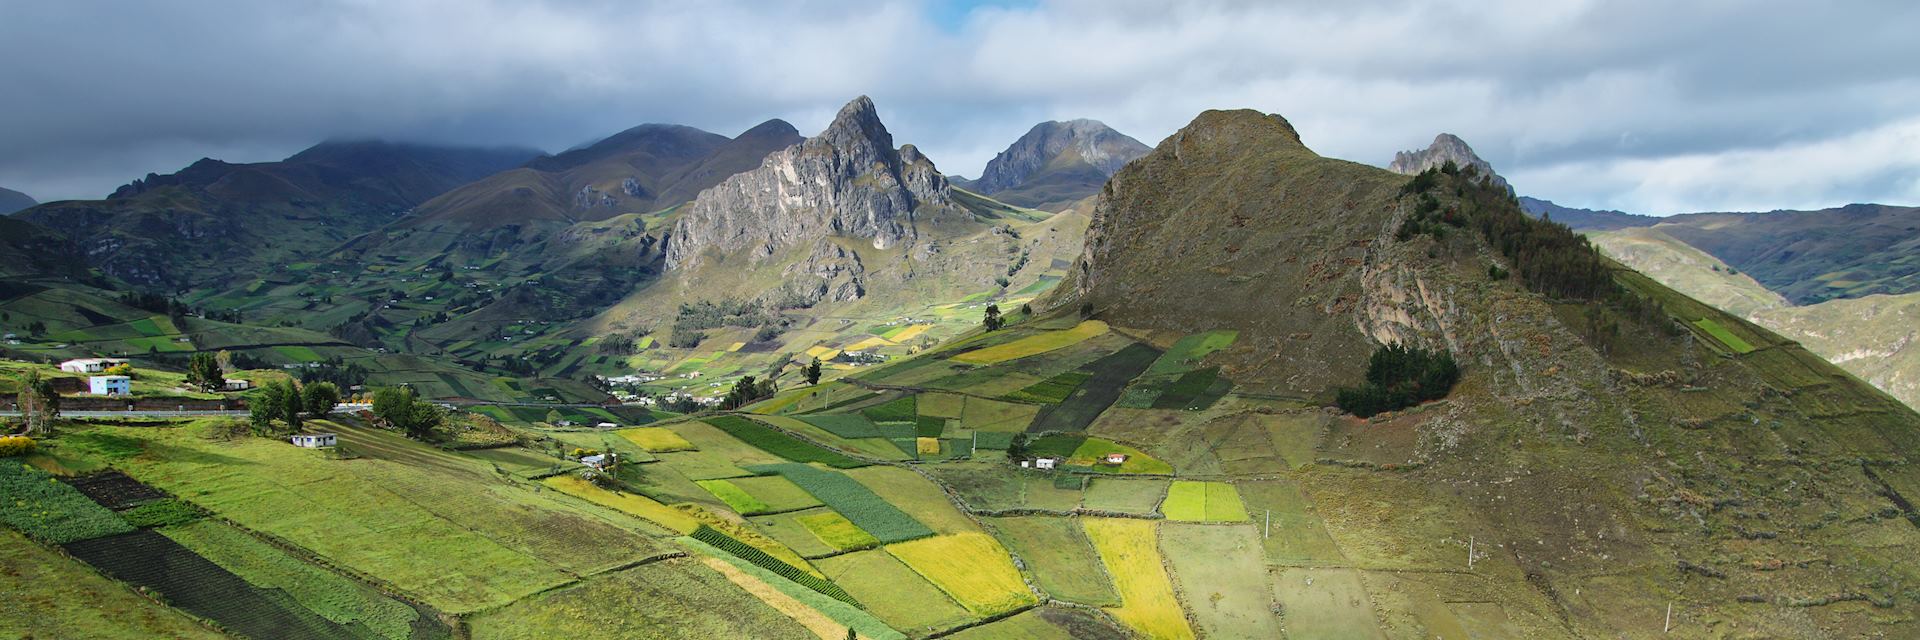 Highlands of Ecuador